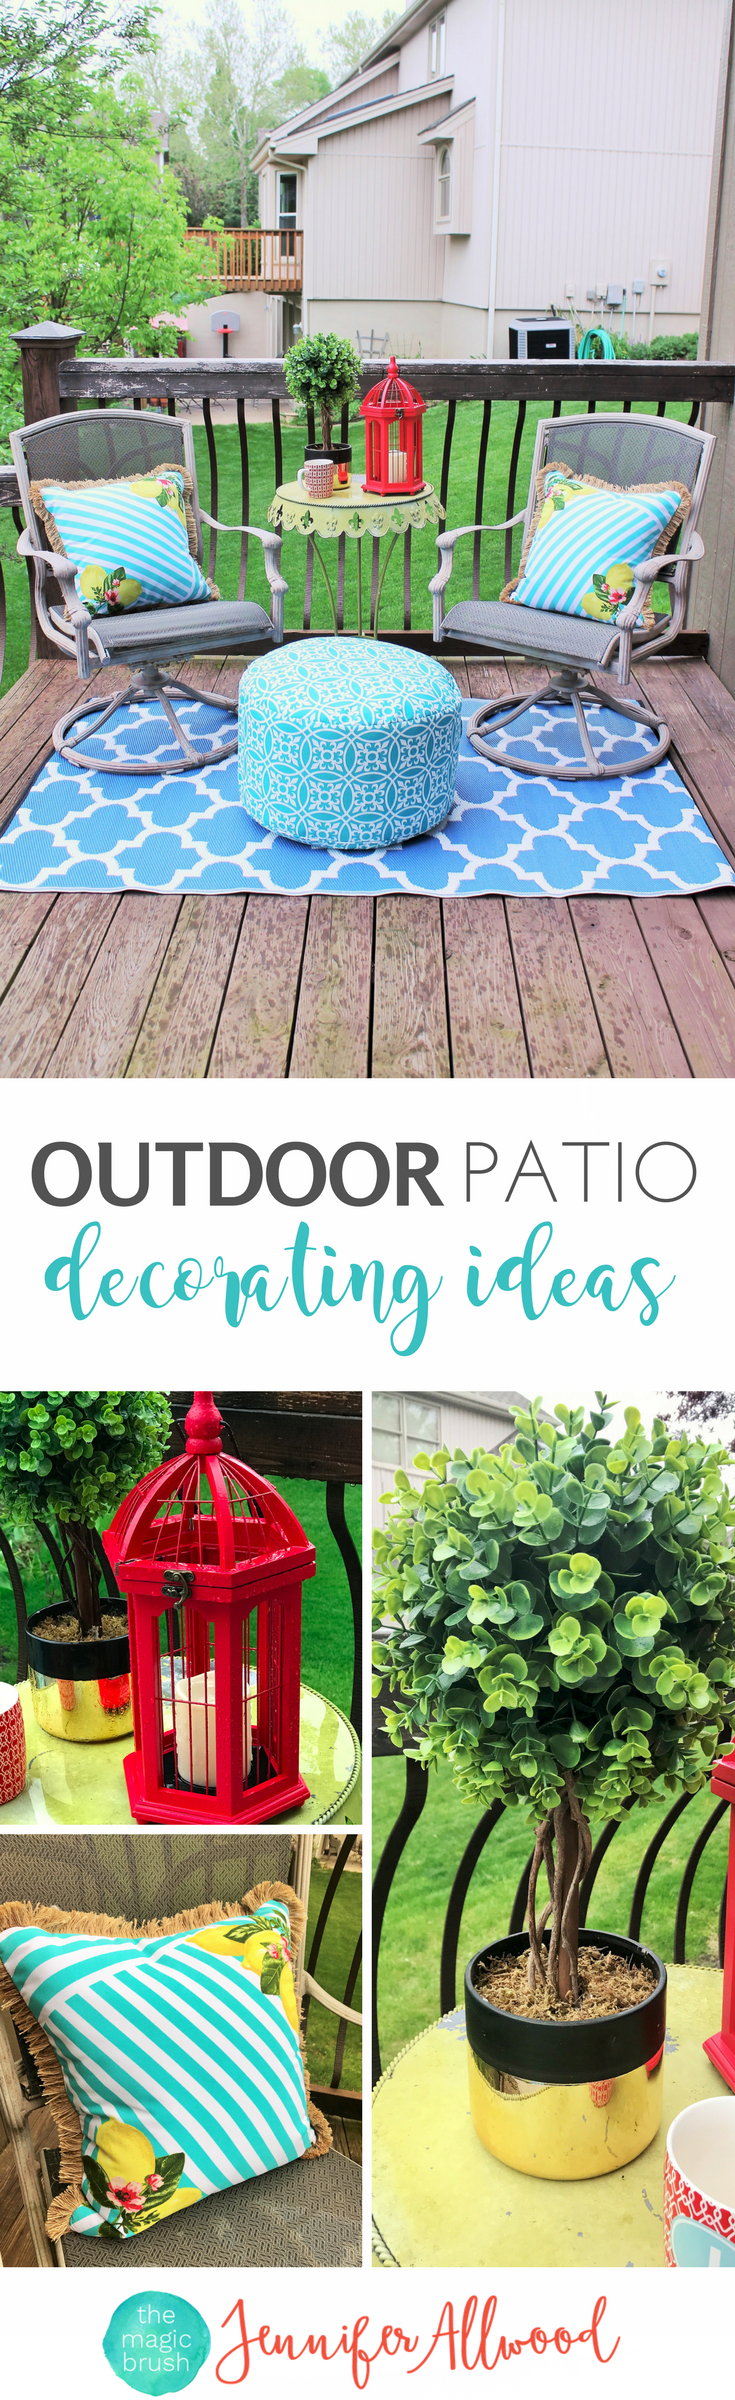 Outdoor Patio Decor by Jennifer Allwood | Patio Decorating Ideas + Outdoor Pouf + Blue + Yellow Decor + Porch Decor + Red Lantern + Topiary Decor